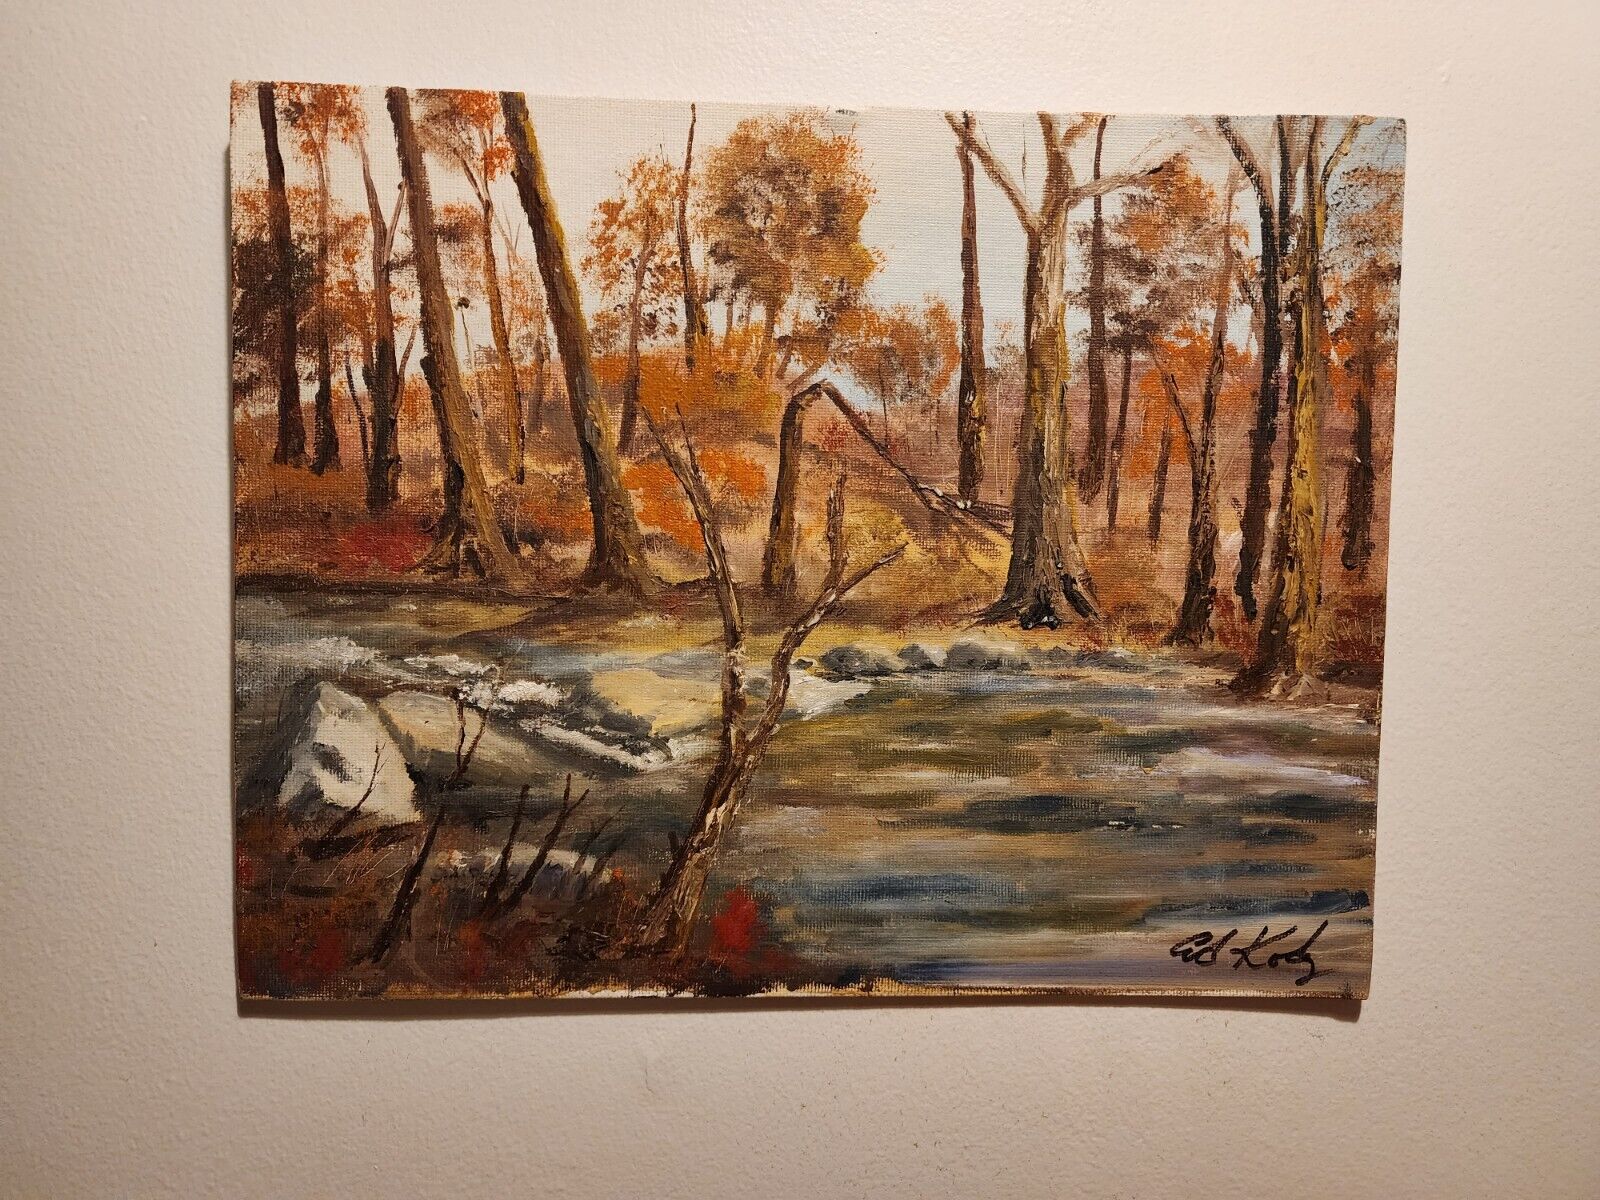 Sheeder Mill Historic Kimberton Pennsylvania French Creek Painting Ed Kody 2017